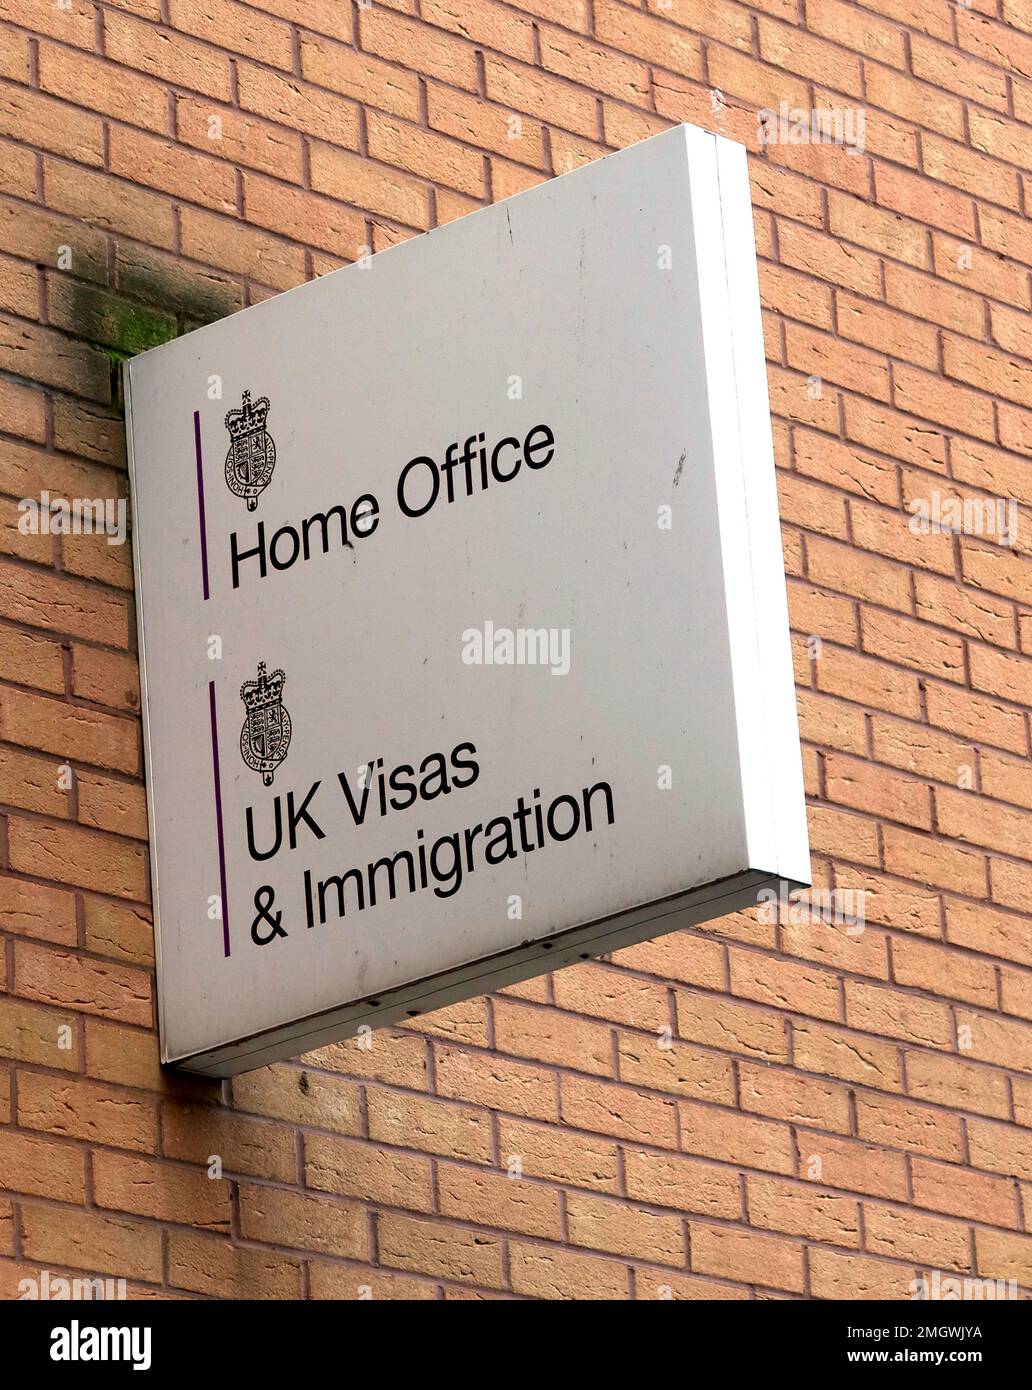 Home Office, UK Visa & immigration, Old Hall St, Llverpool city, centre, Merseyside, England, UK, L3 9BP - Home Secretary Suella Braverman Stock Photo